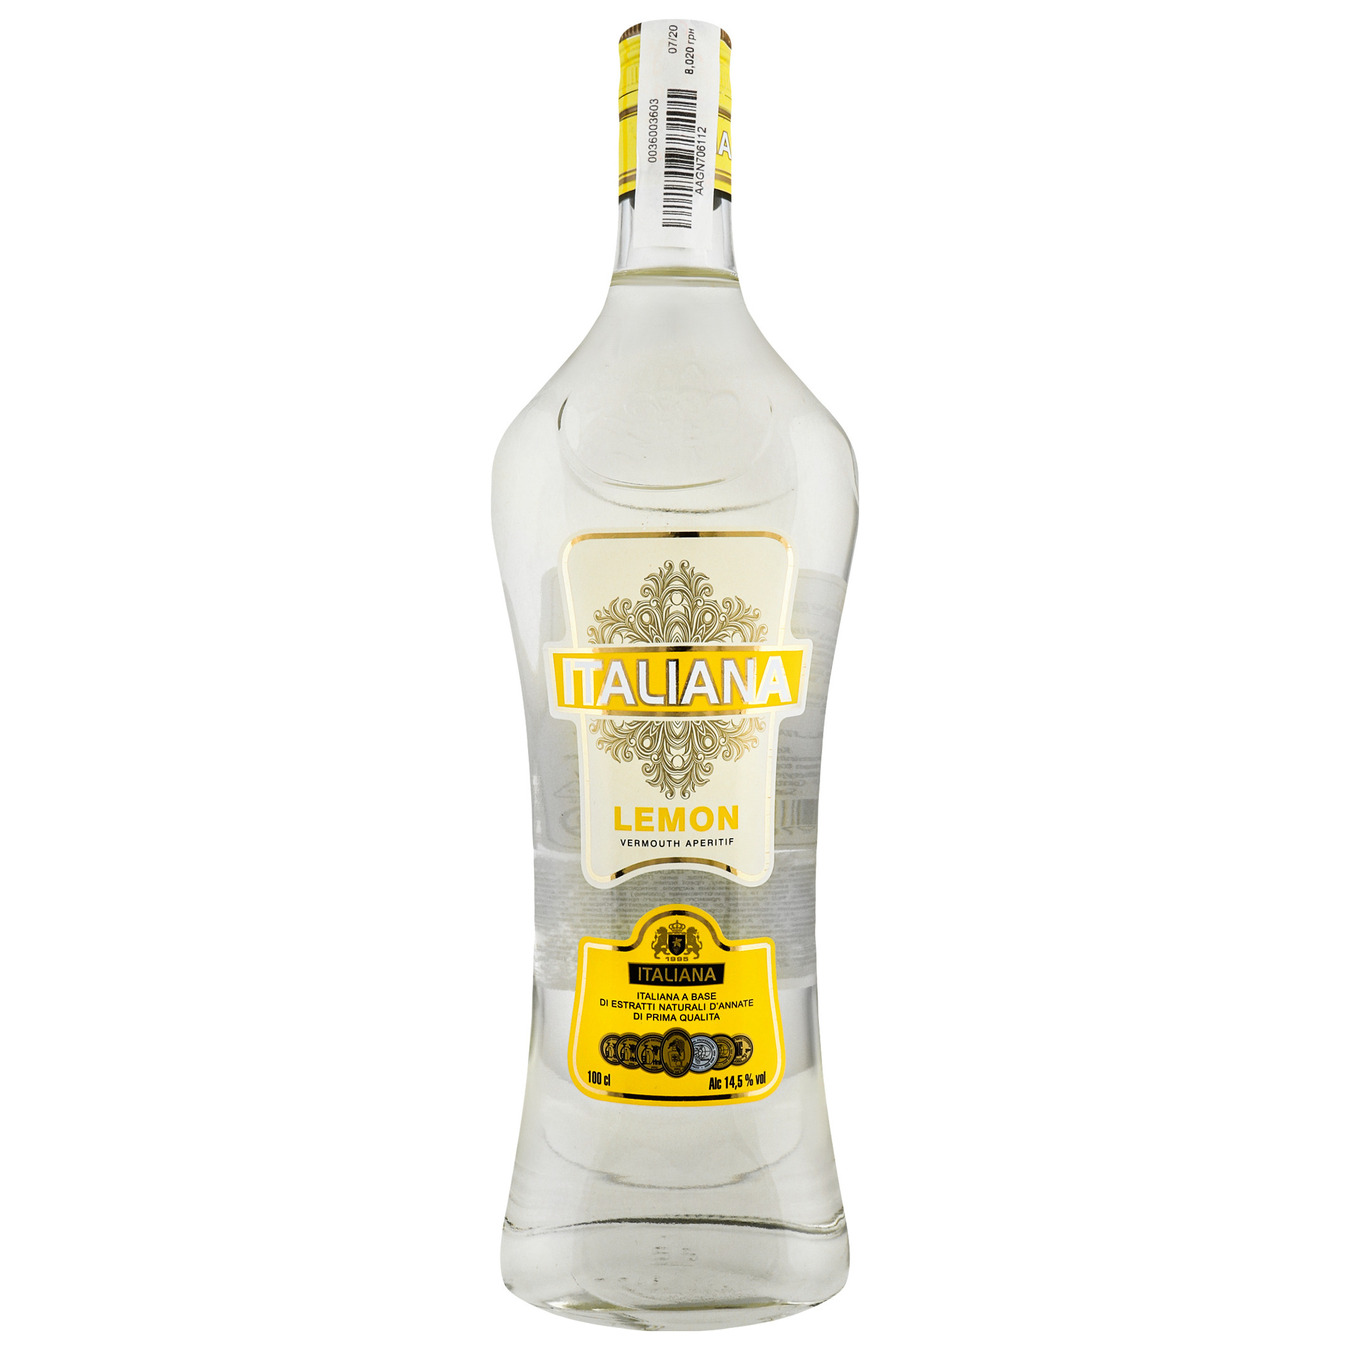 Вермут Italiana Lemon сладкий 14,5% 1л